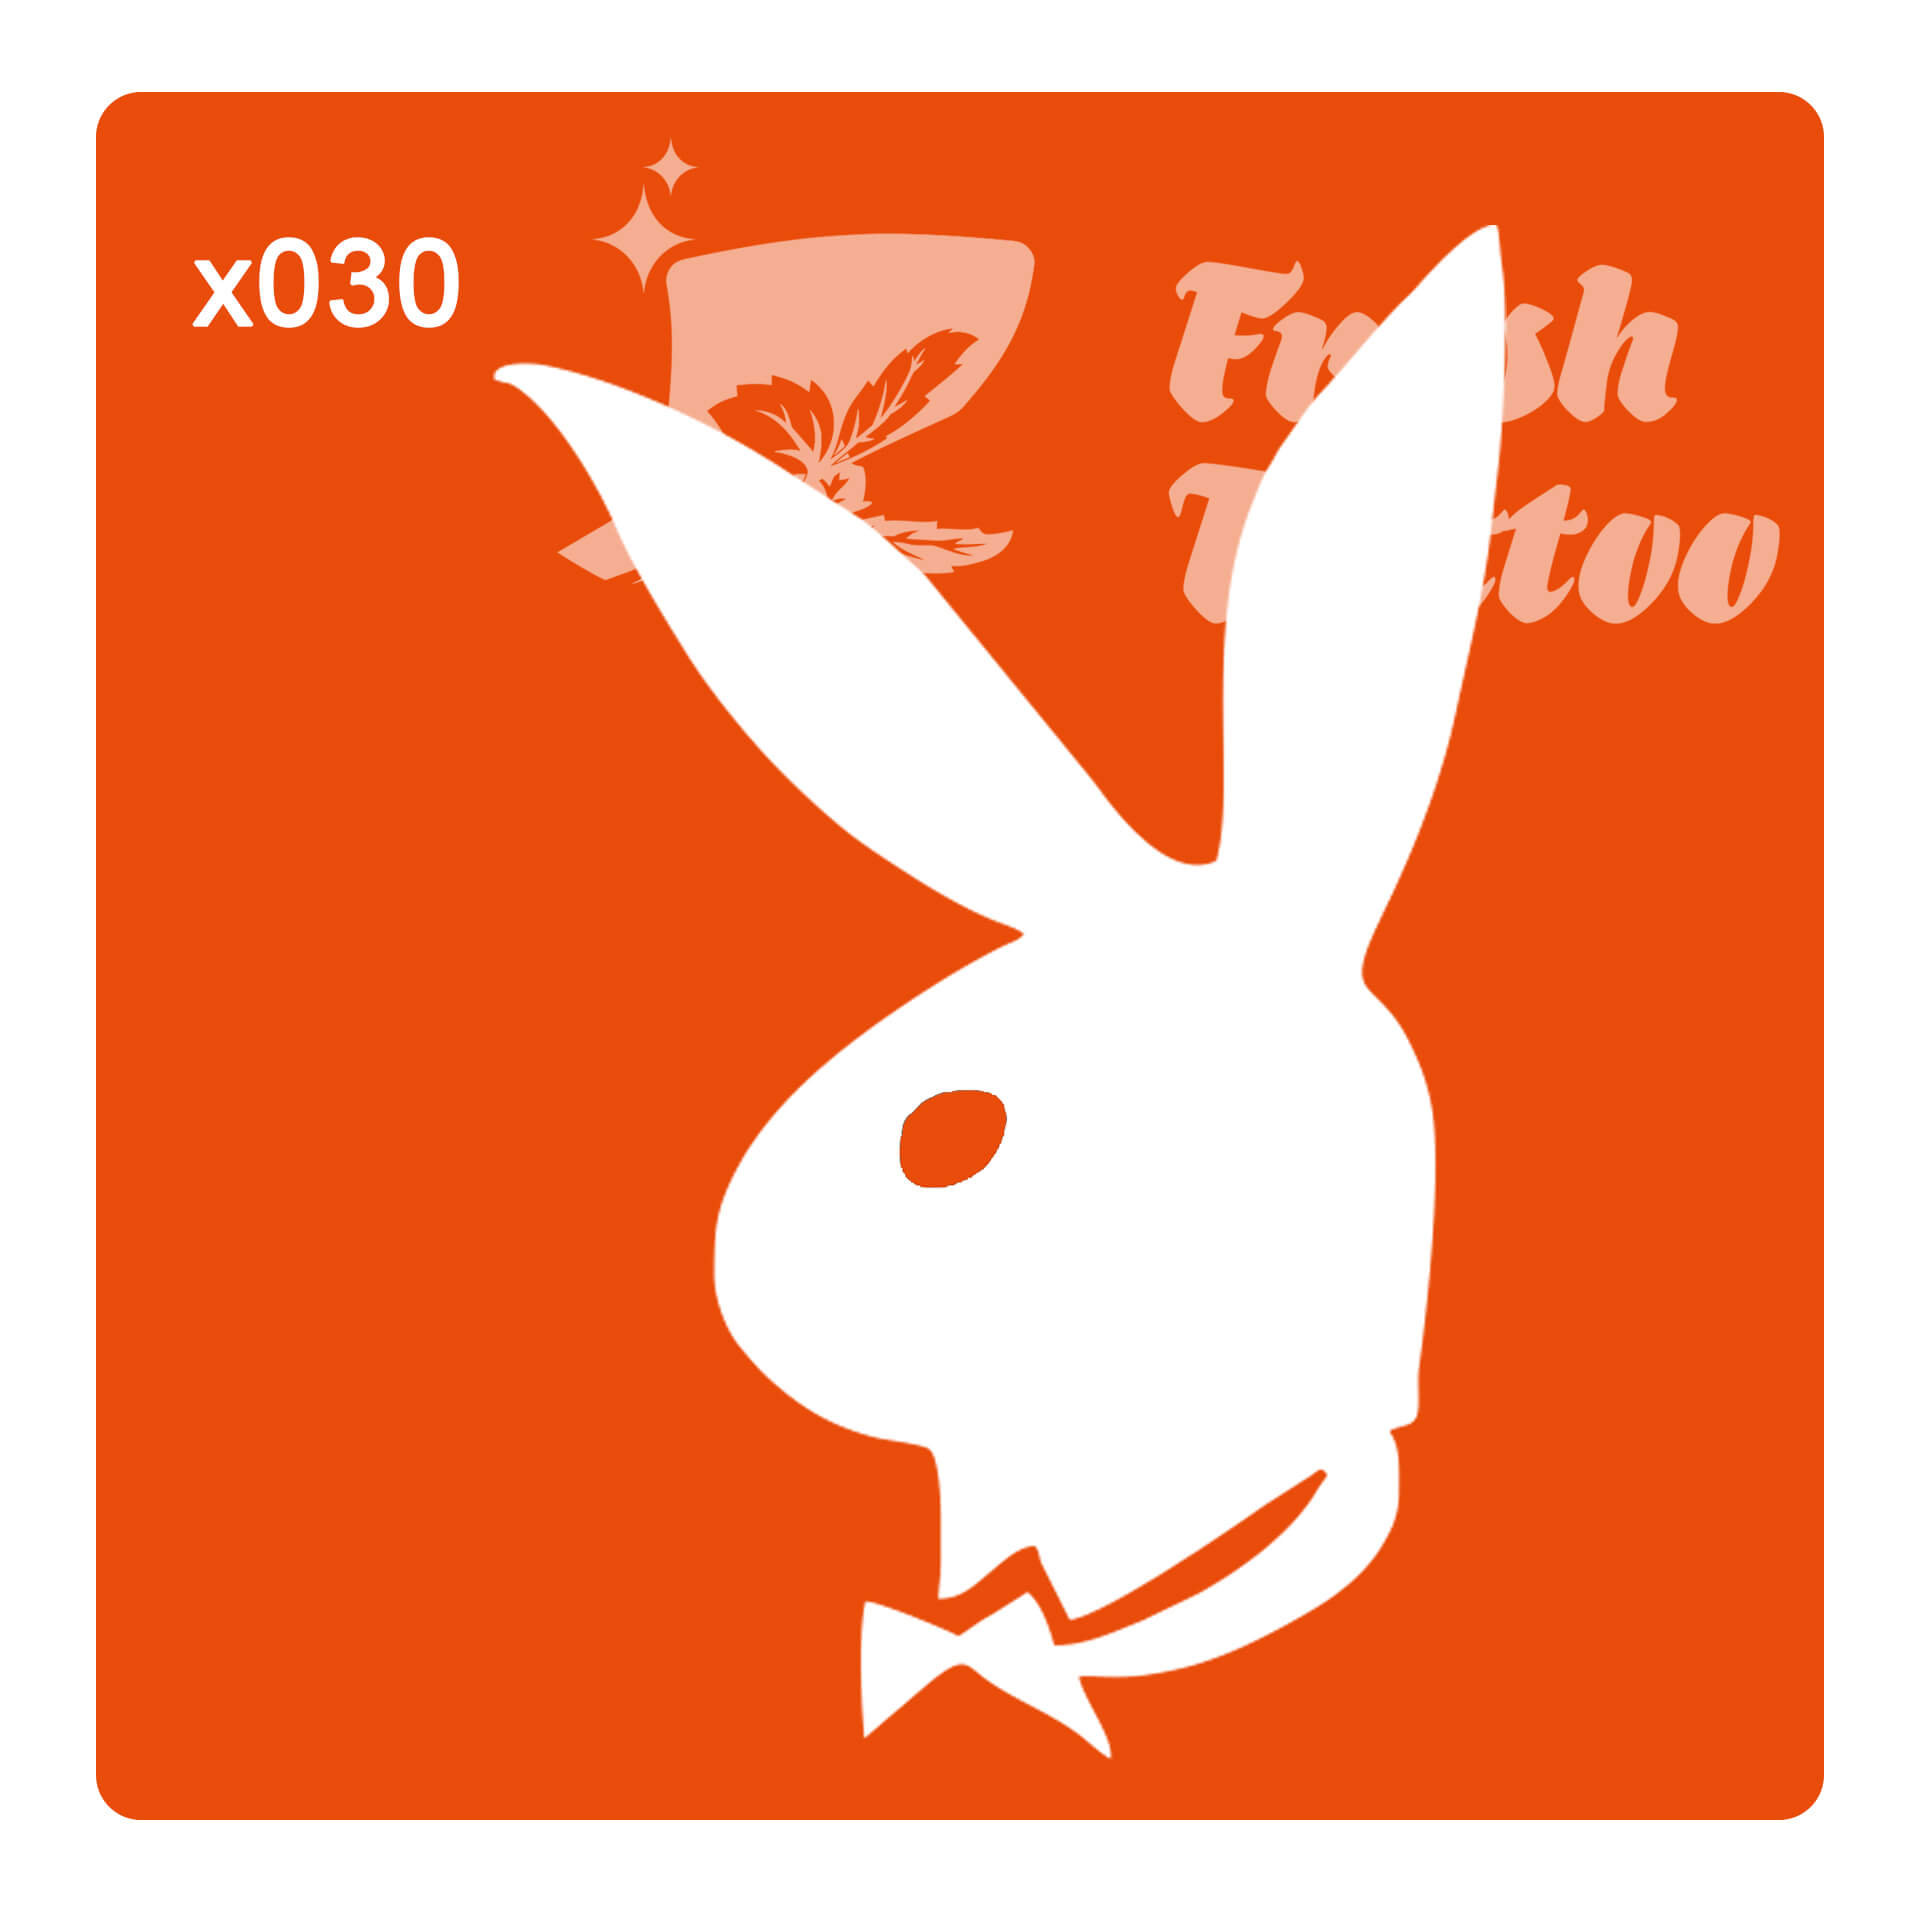  Playboy x030  